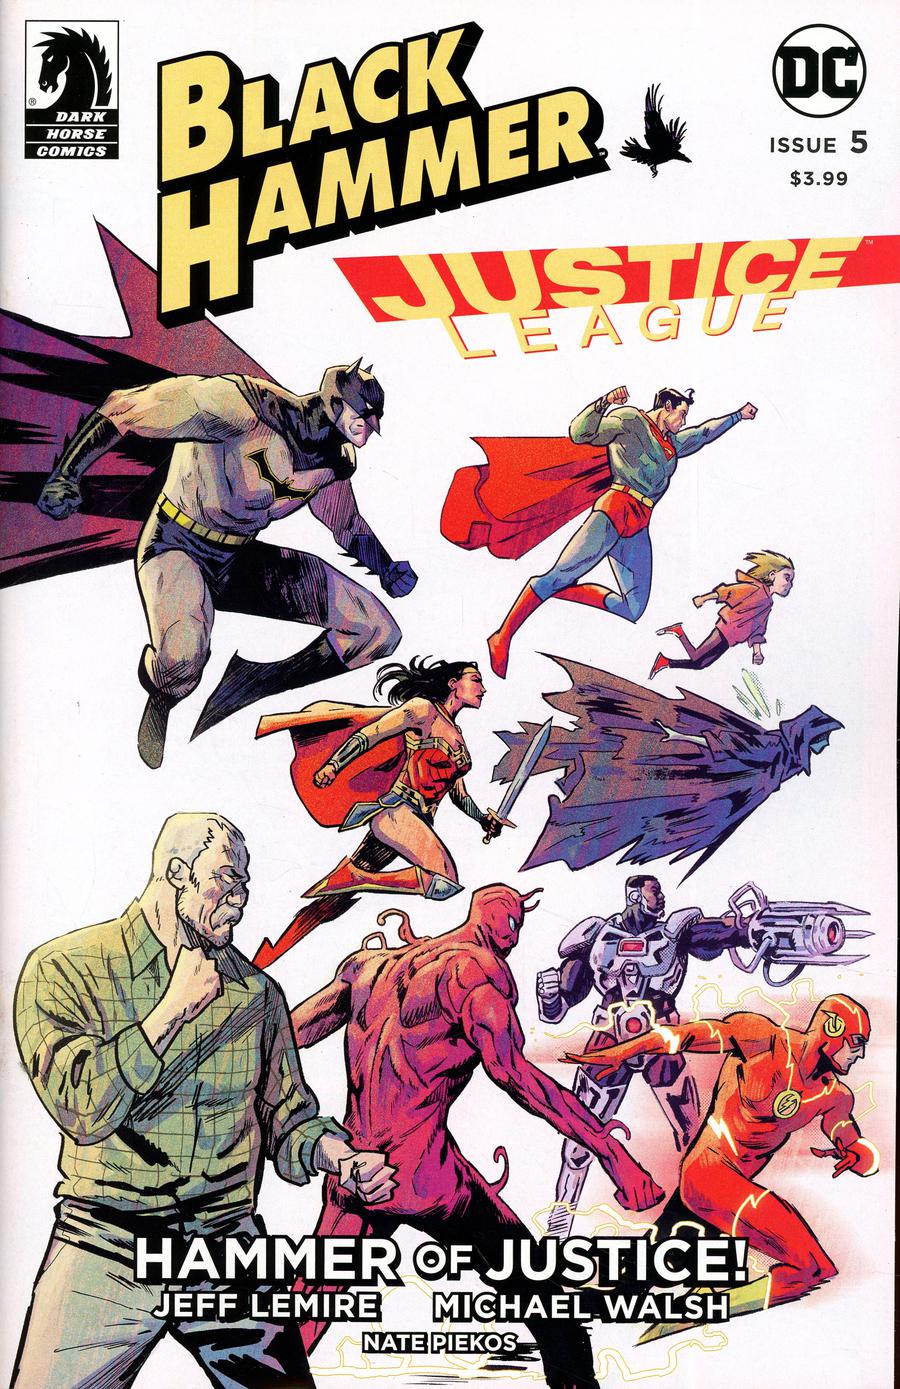 Black Hammer Justice League #5 (2019)